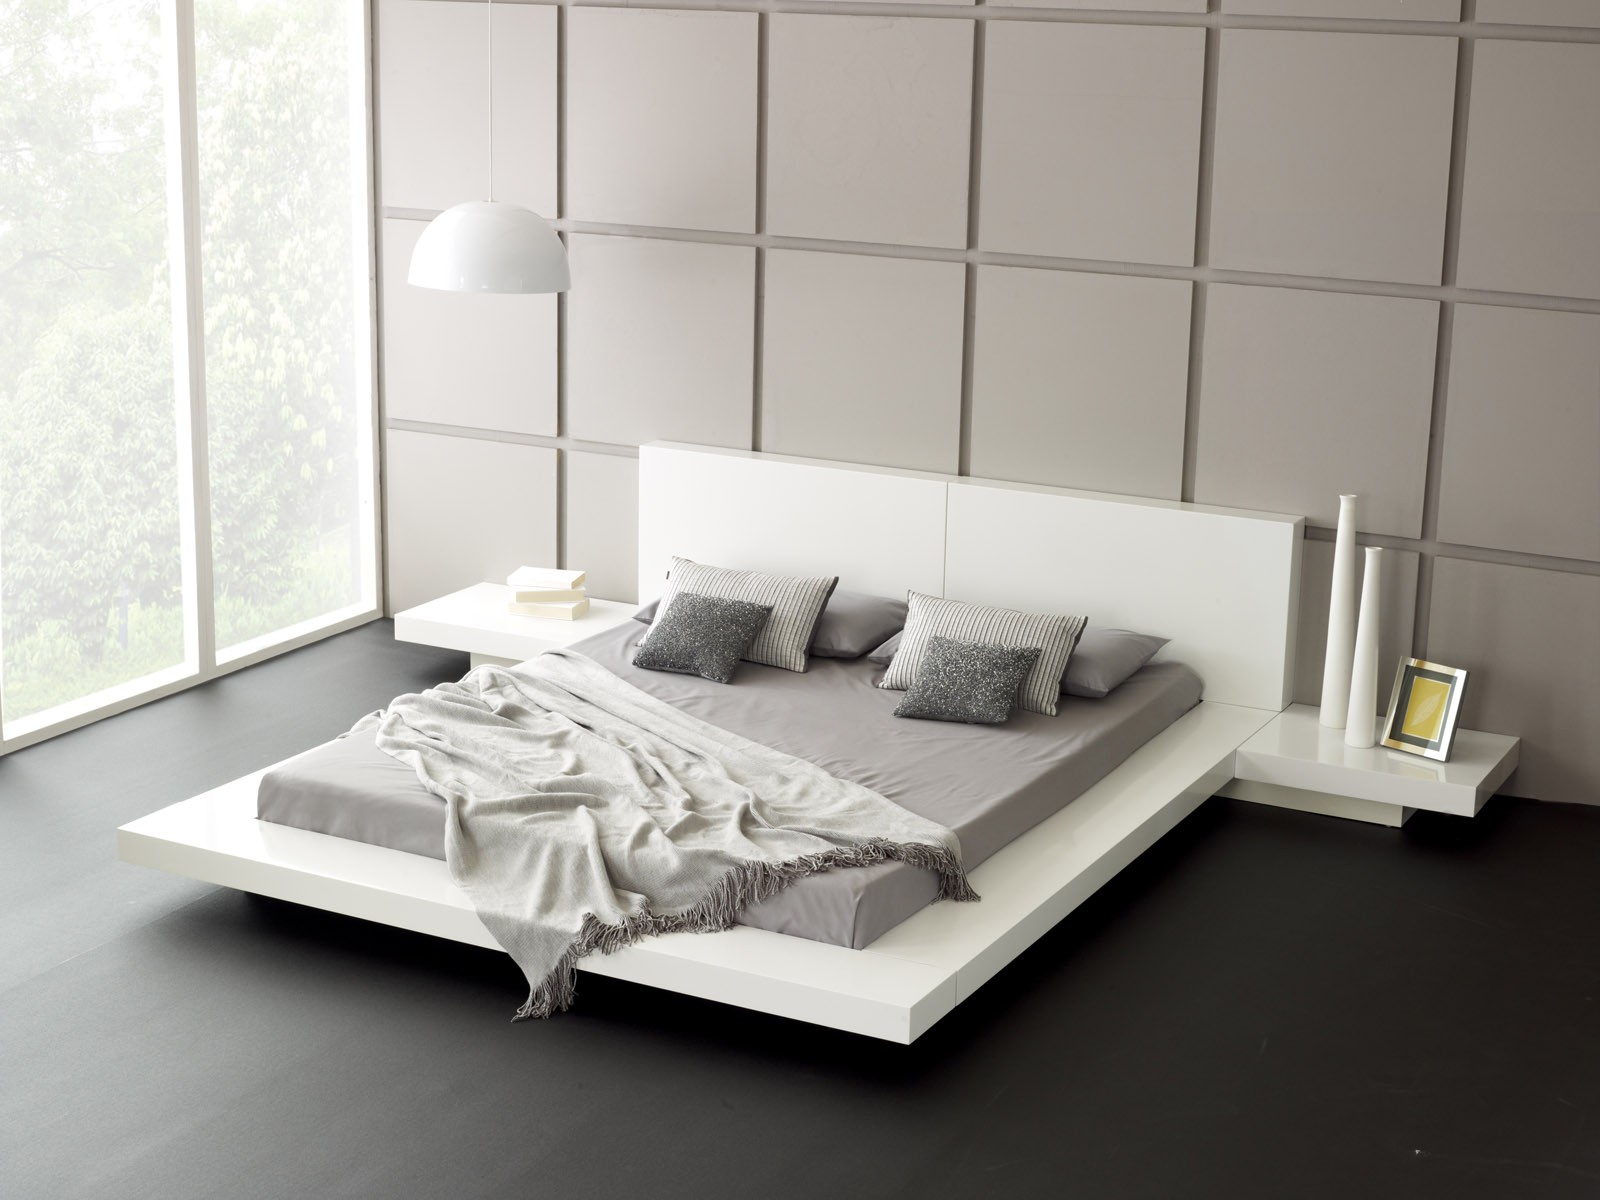 Modern Bedroom Contemporary Style Contemporary Bedroom